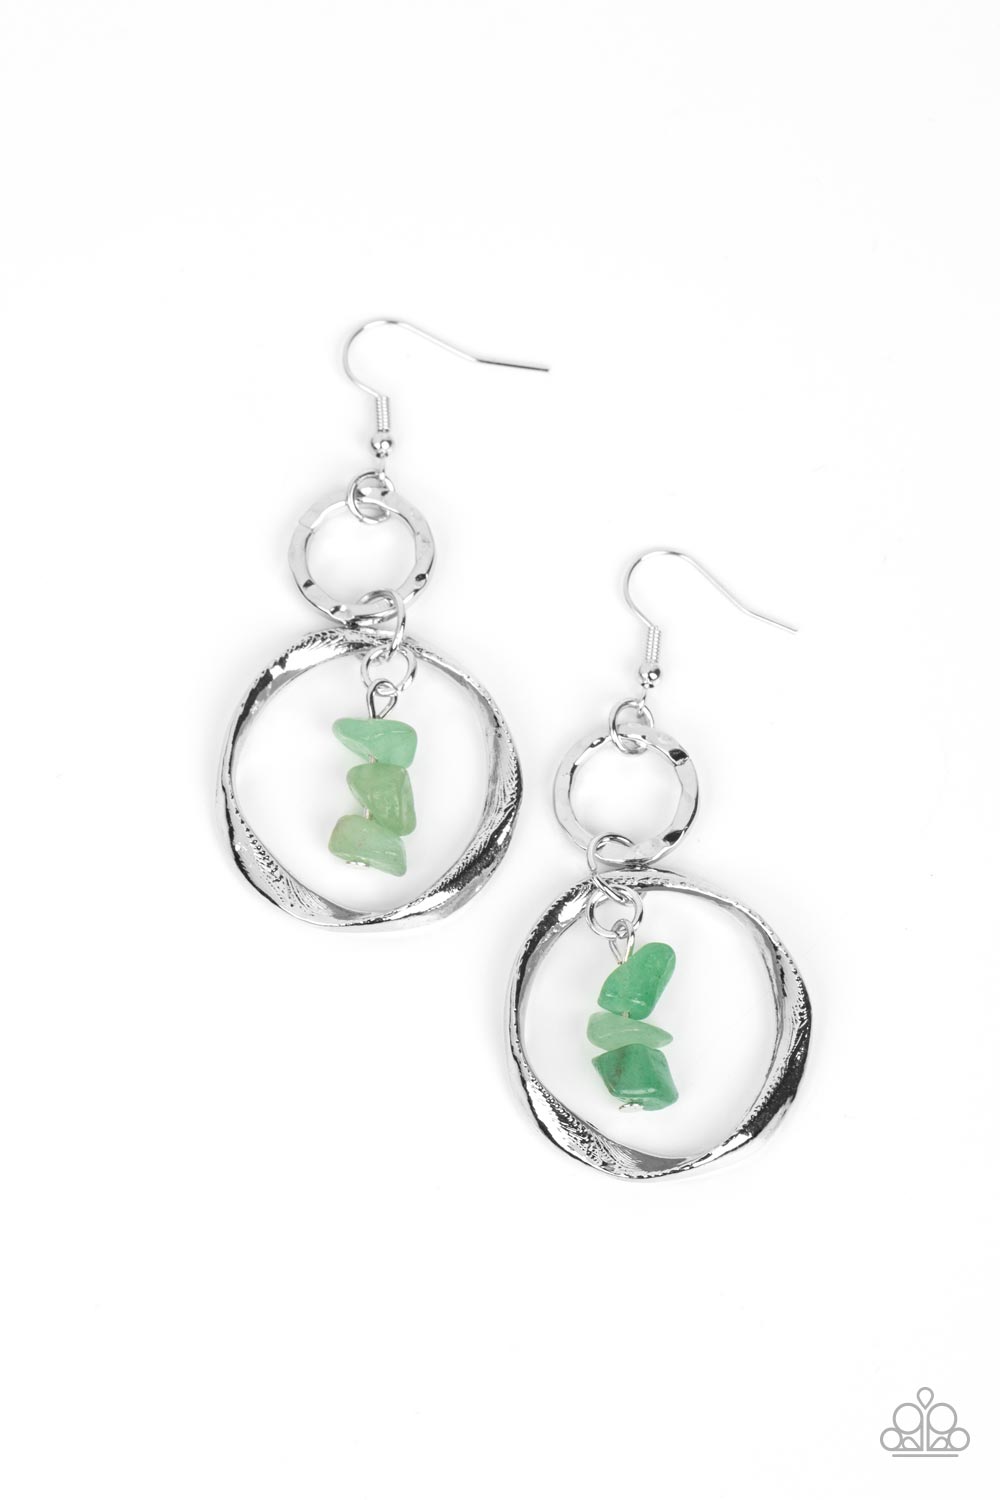 Good-Natured Spirit - green - Paparazzi earrings